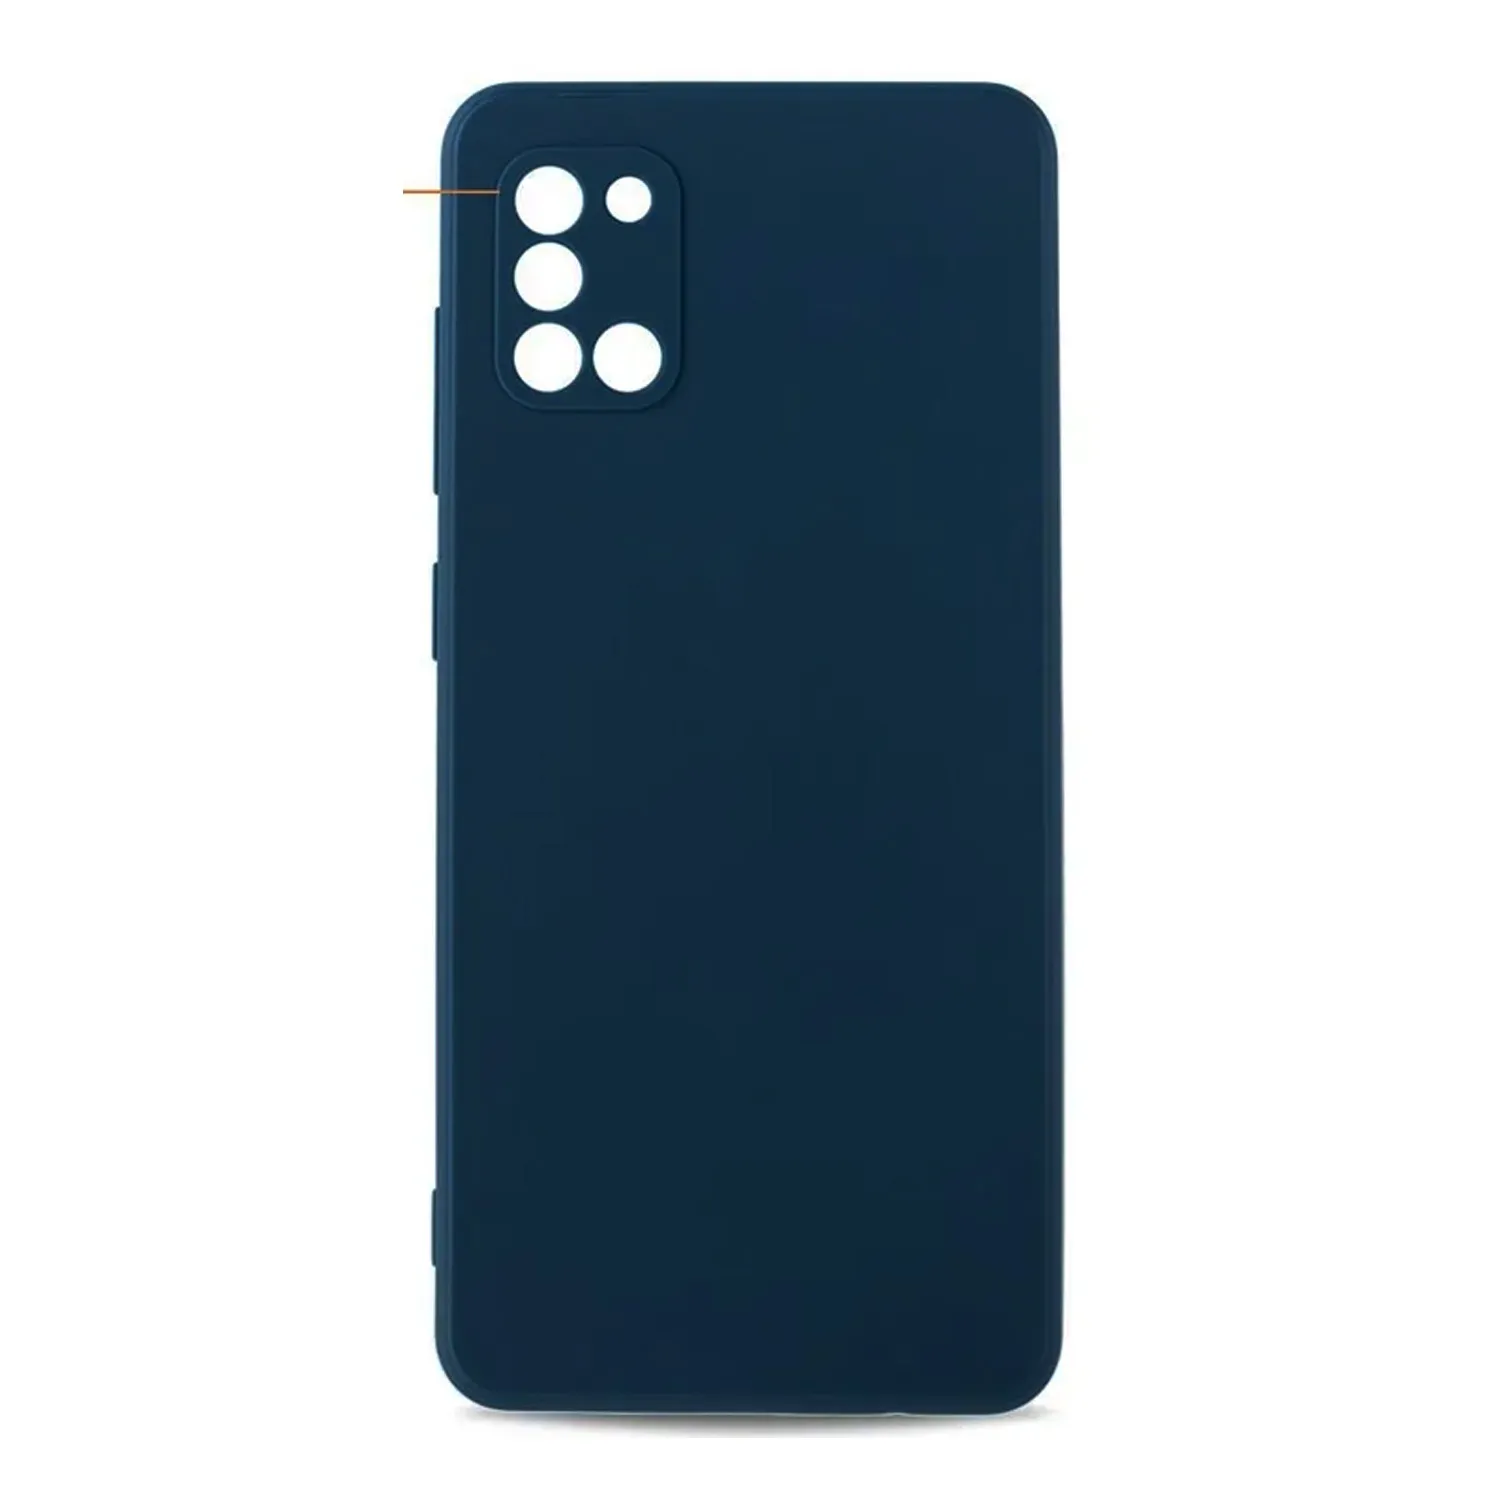 Силиконовый чехол FASHION CASE Samsung Galaxy A31 SM-A315F (темно - синий)